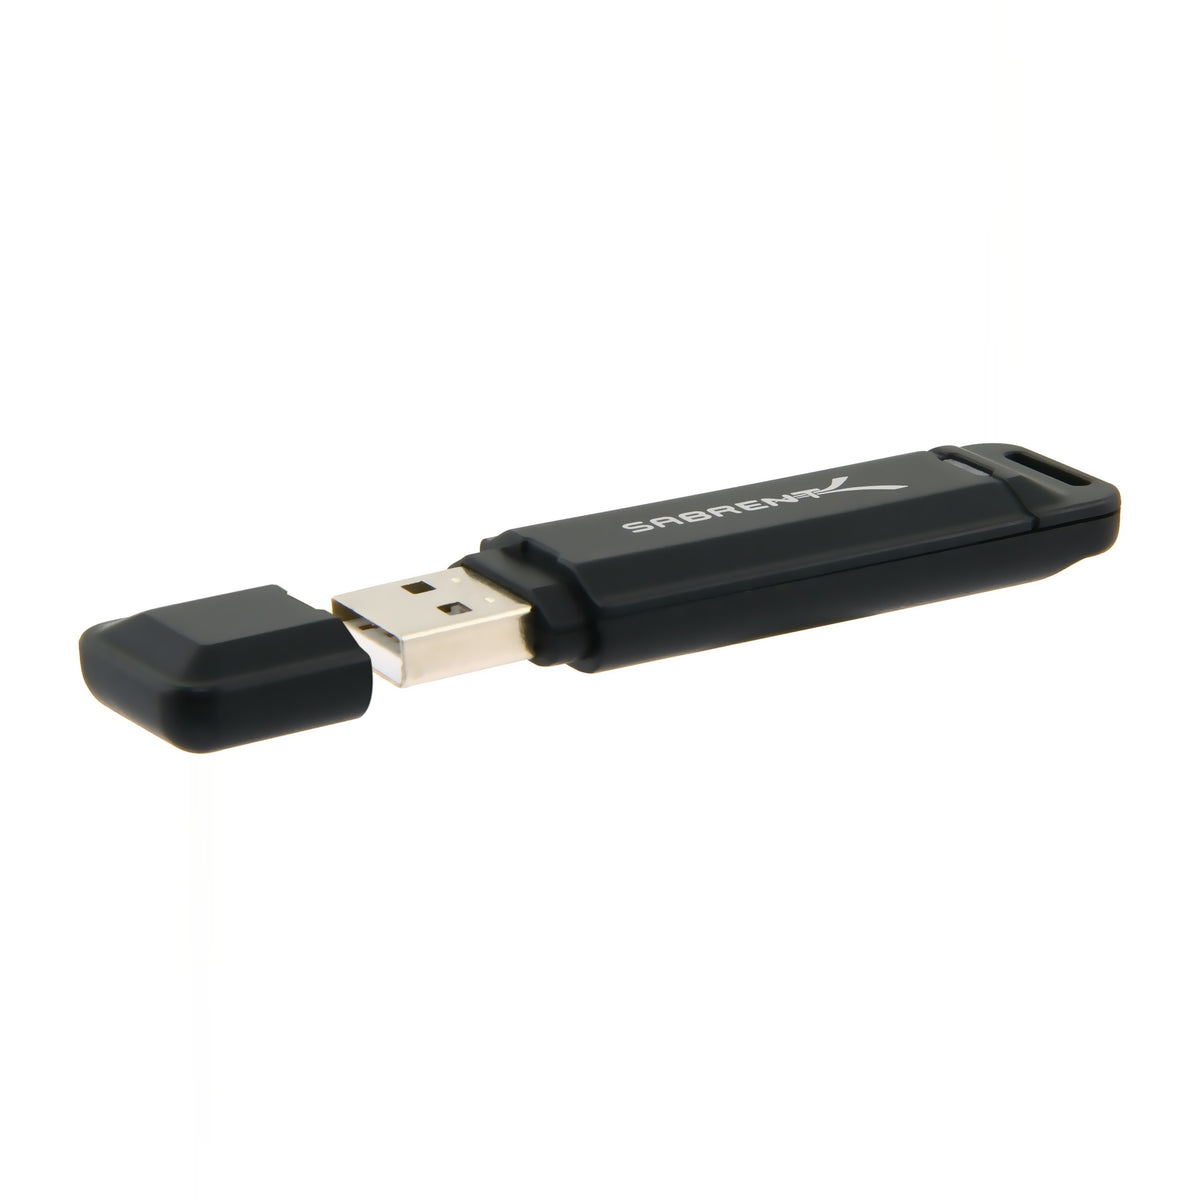 USB 2.0 Wireless 802.11g Adapter